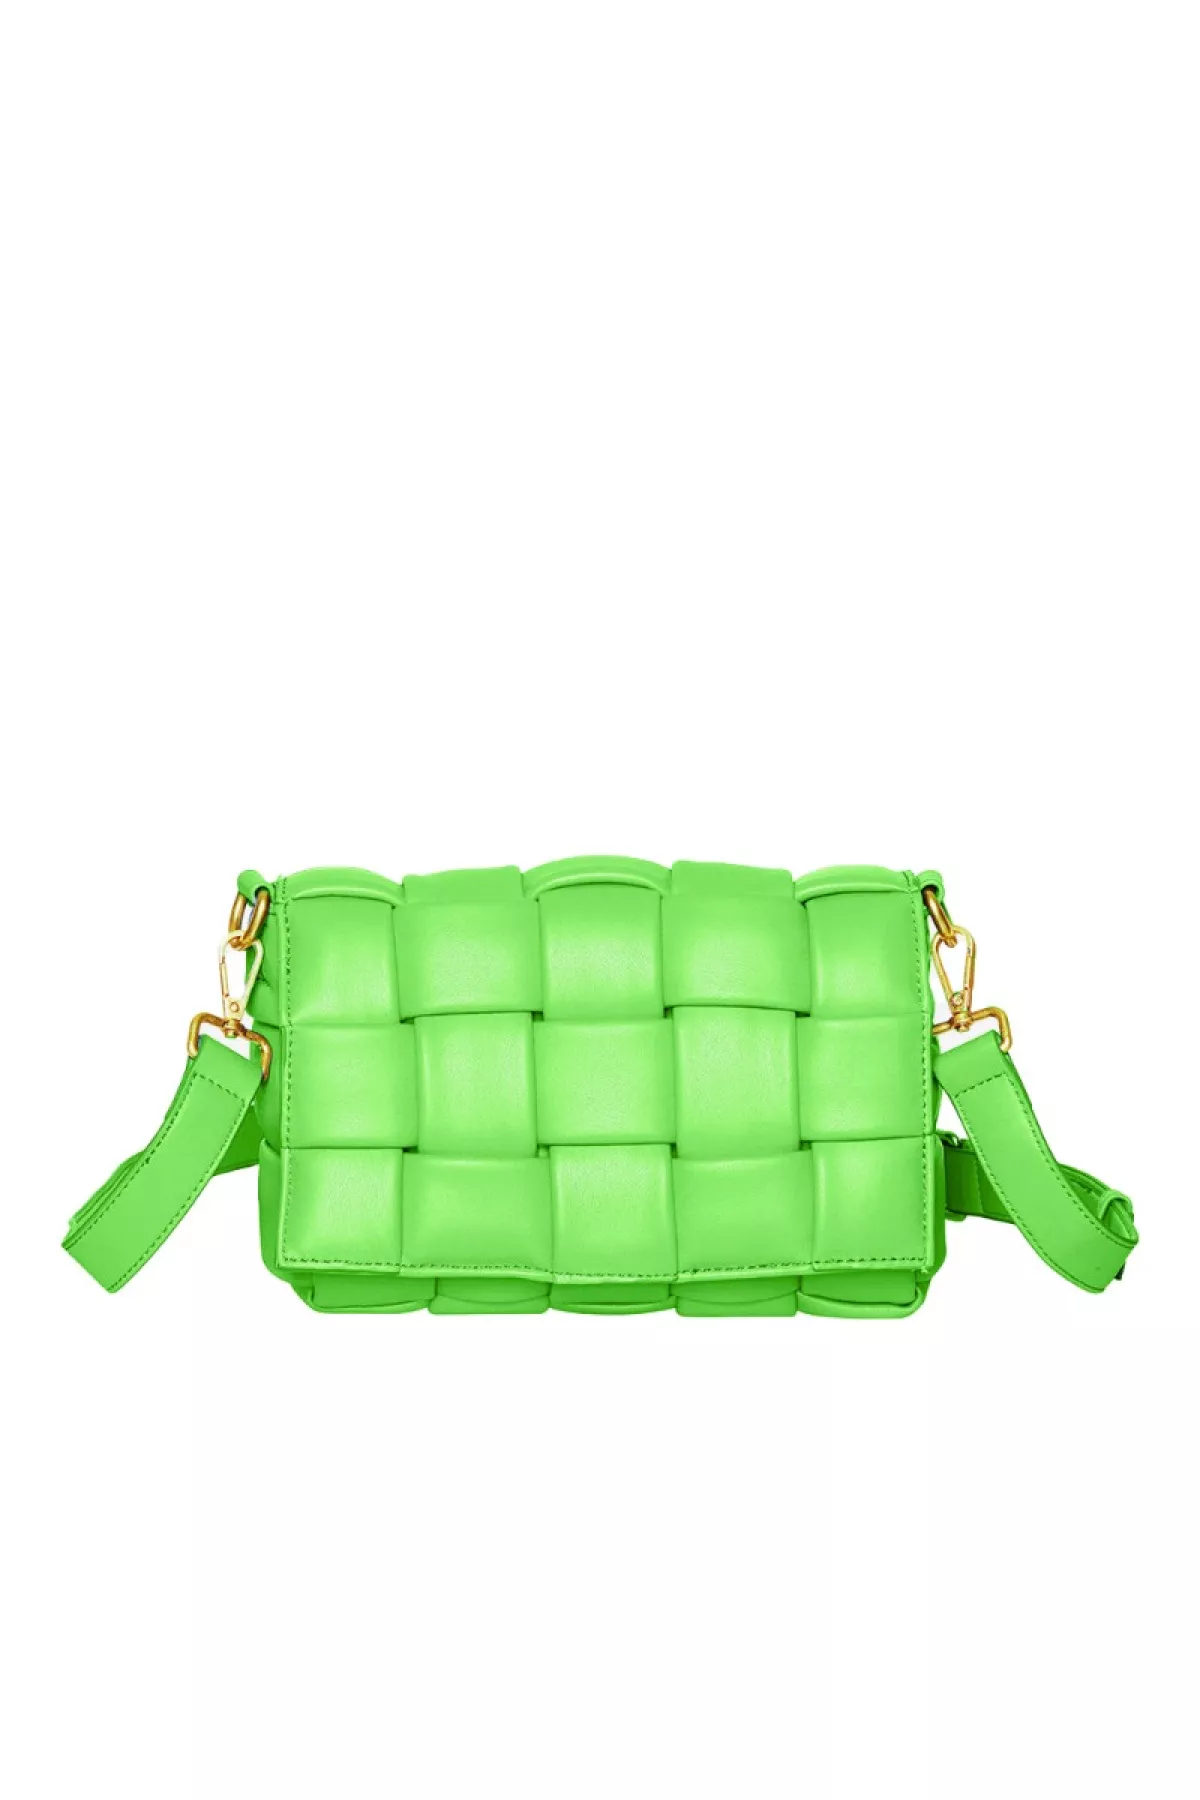 #2 - Noella - Taske - Brick Bag - Neon Green